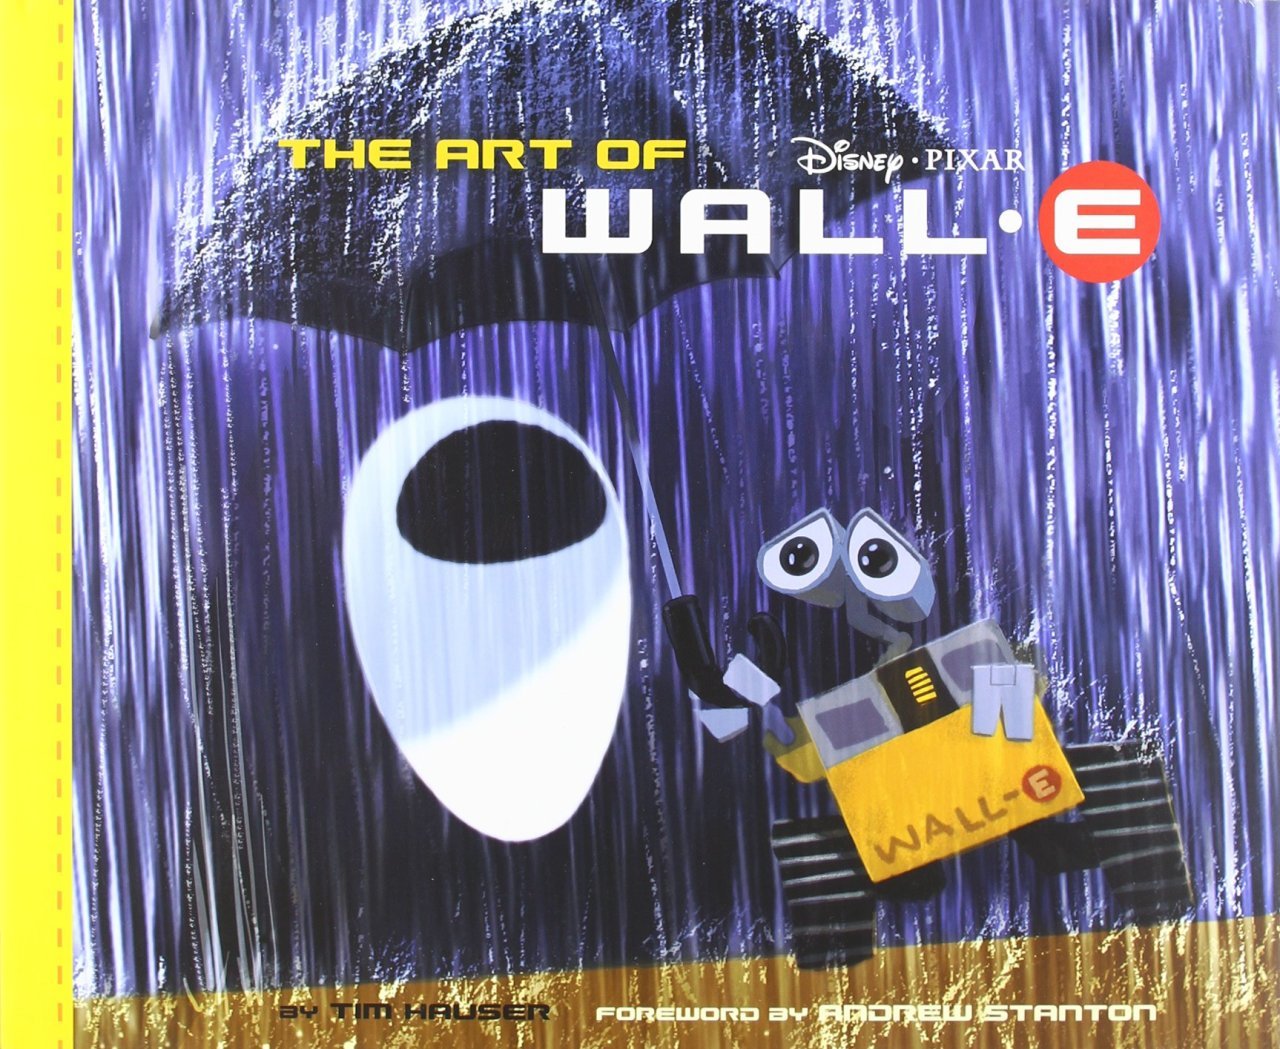 THE ART OF WALL E HC